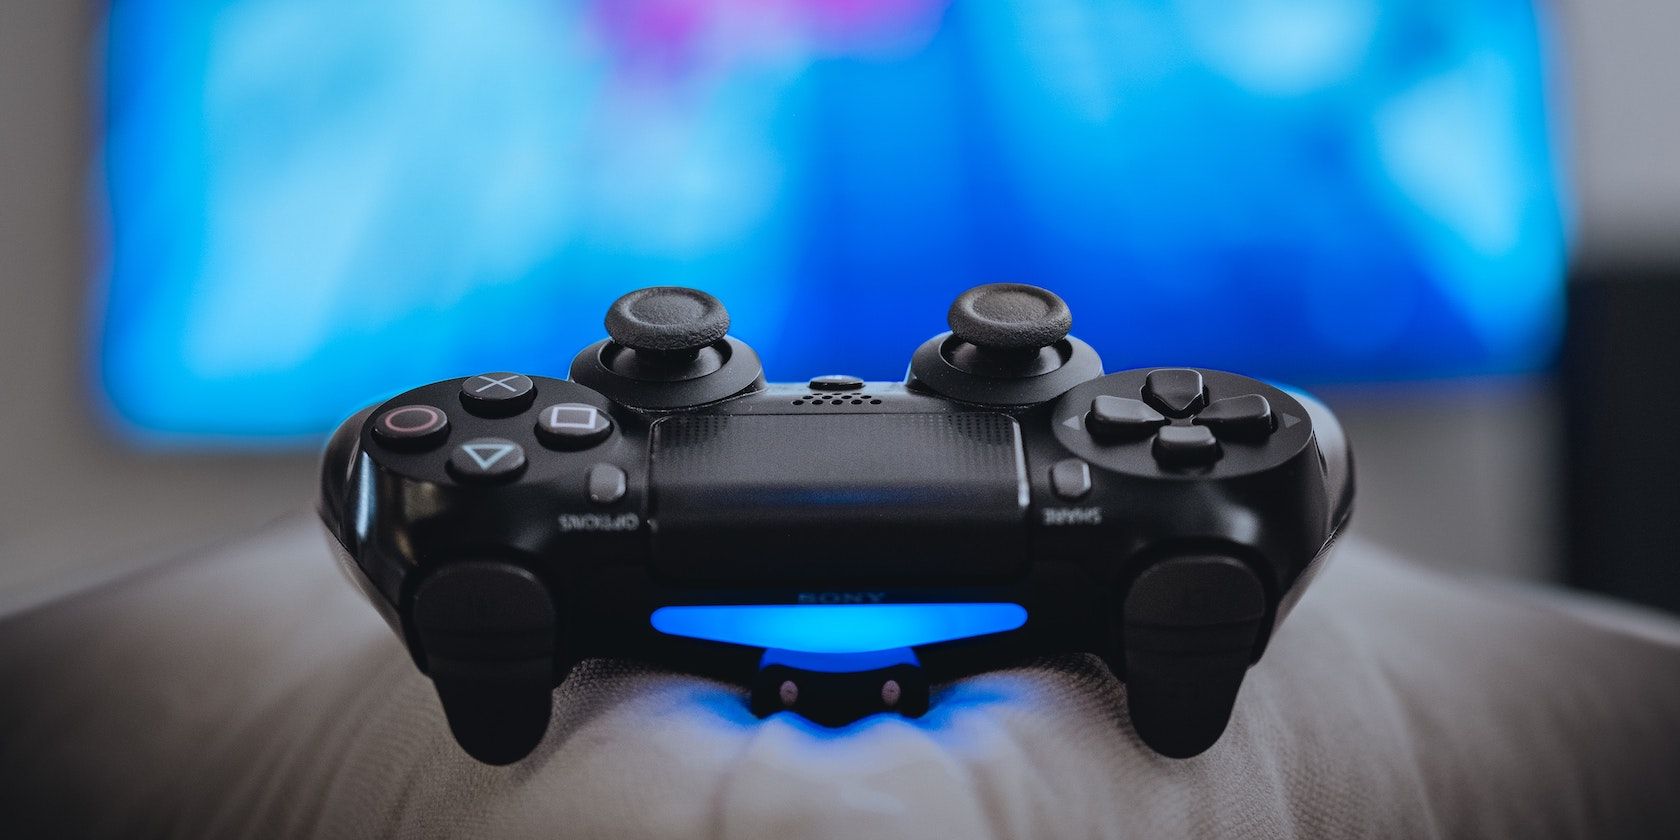 A black PS4 controller facing the camera emitting a blue light